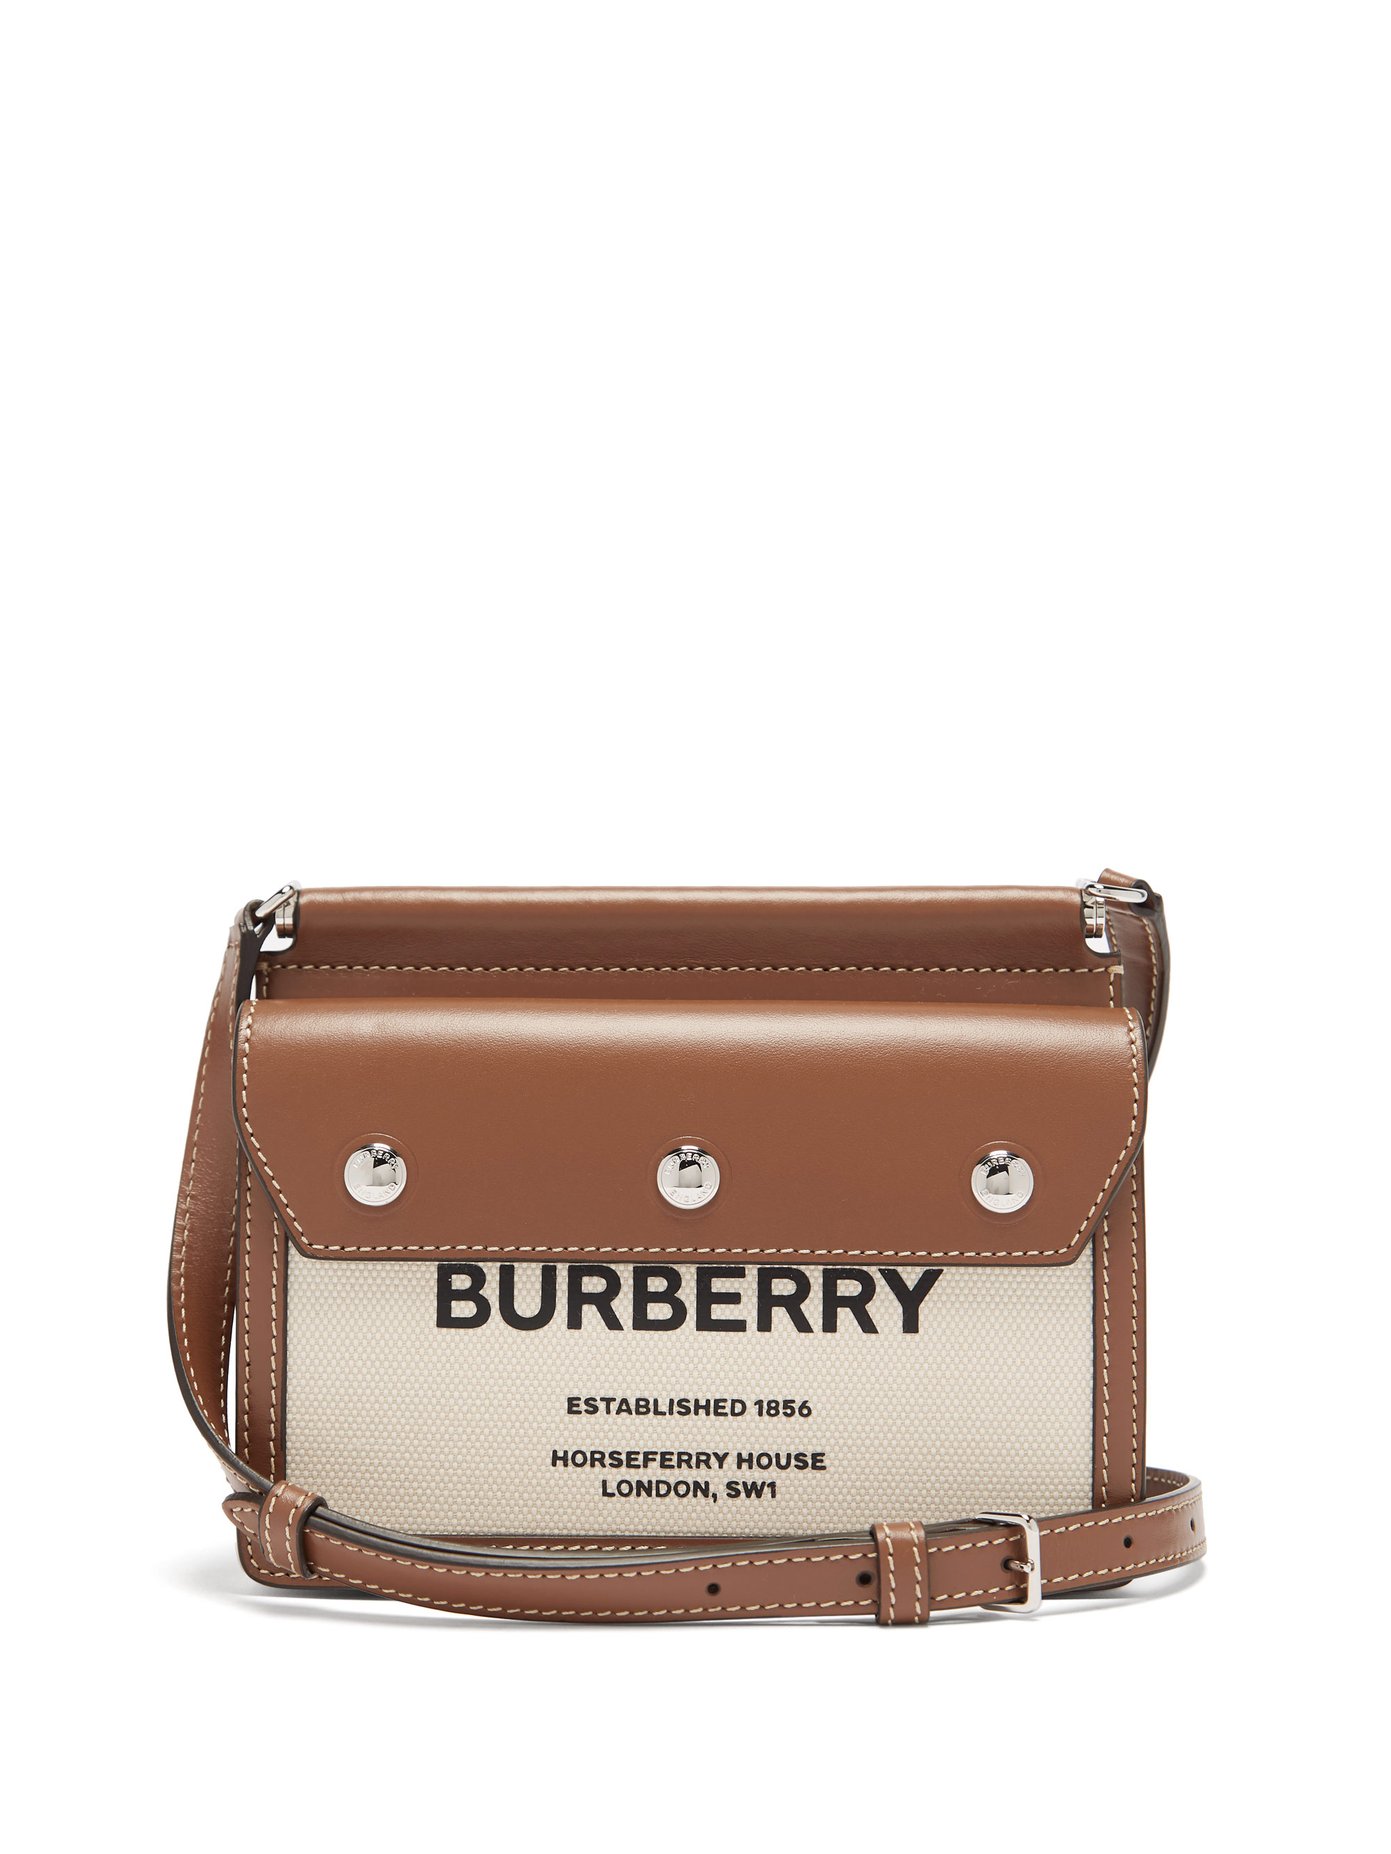 title bag burberry